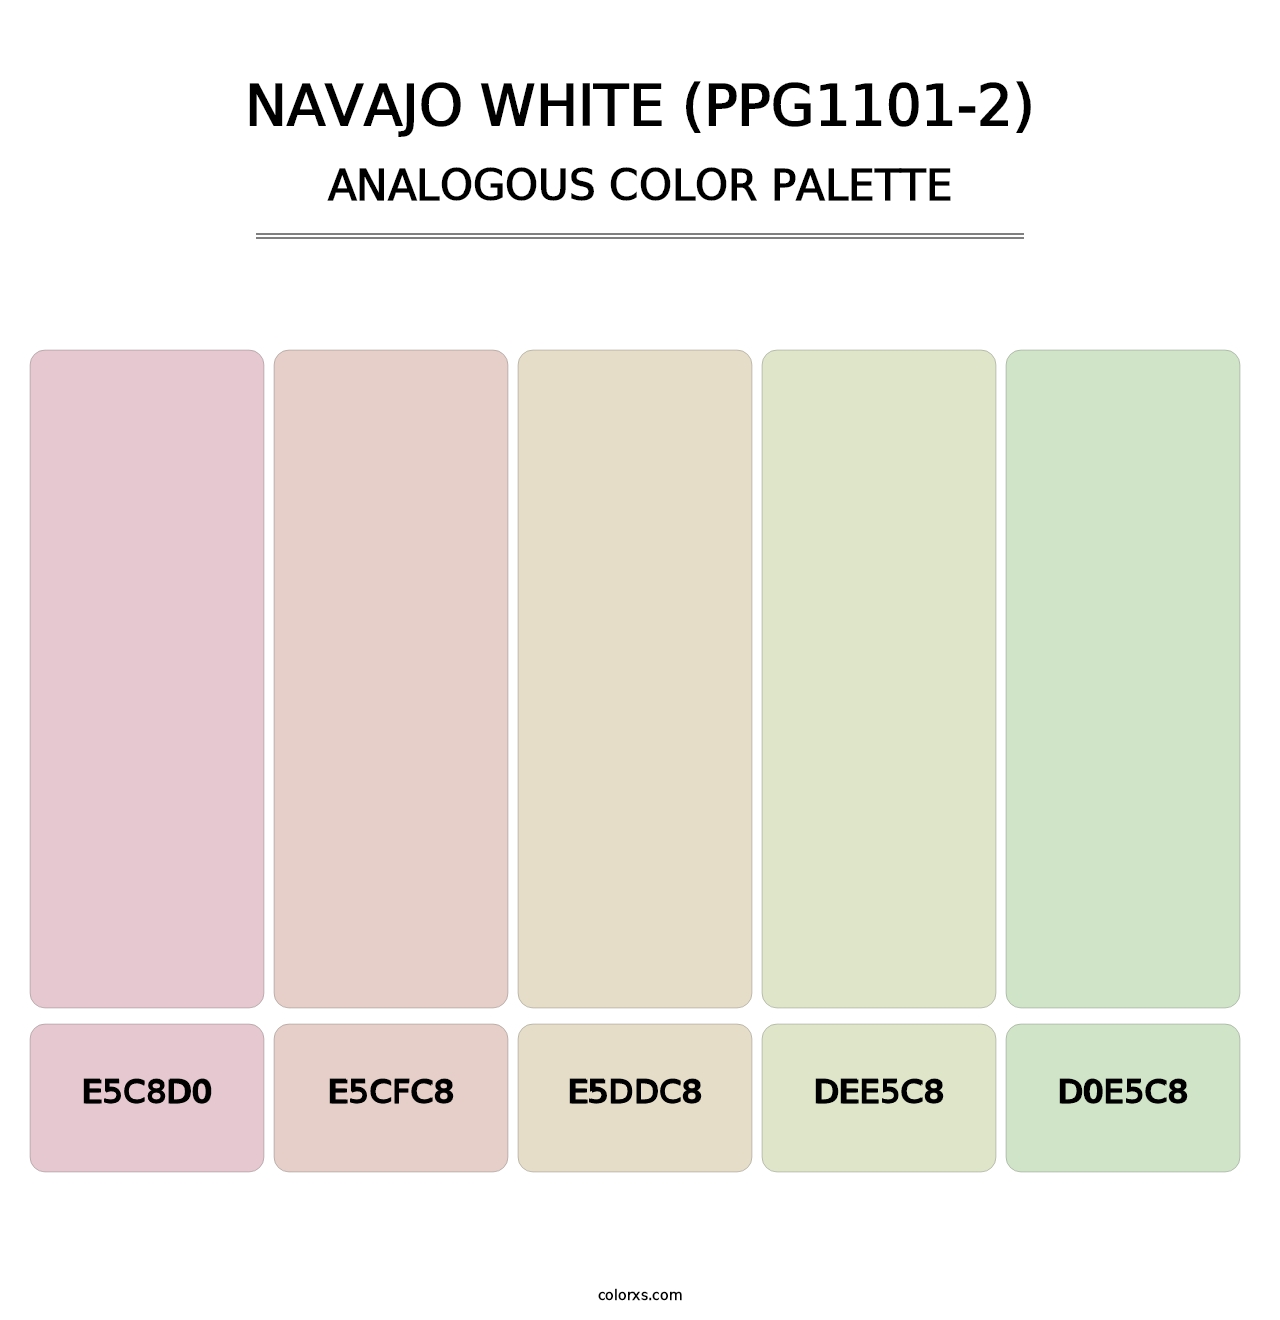 Navajo White (PPG1101-2) - Analogous Color Palette